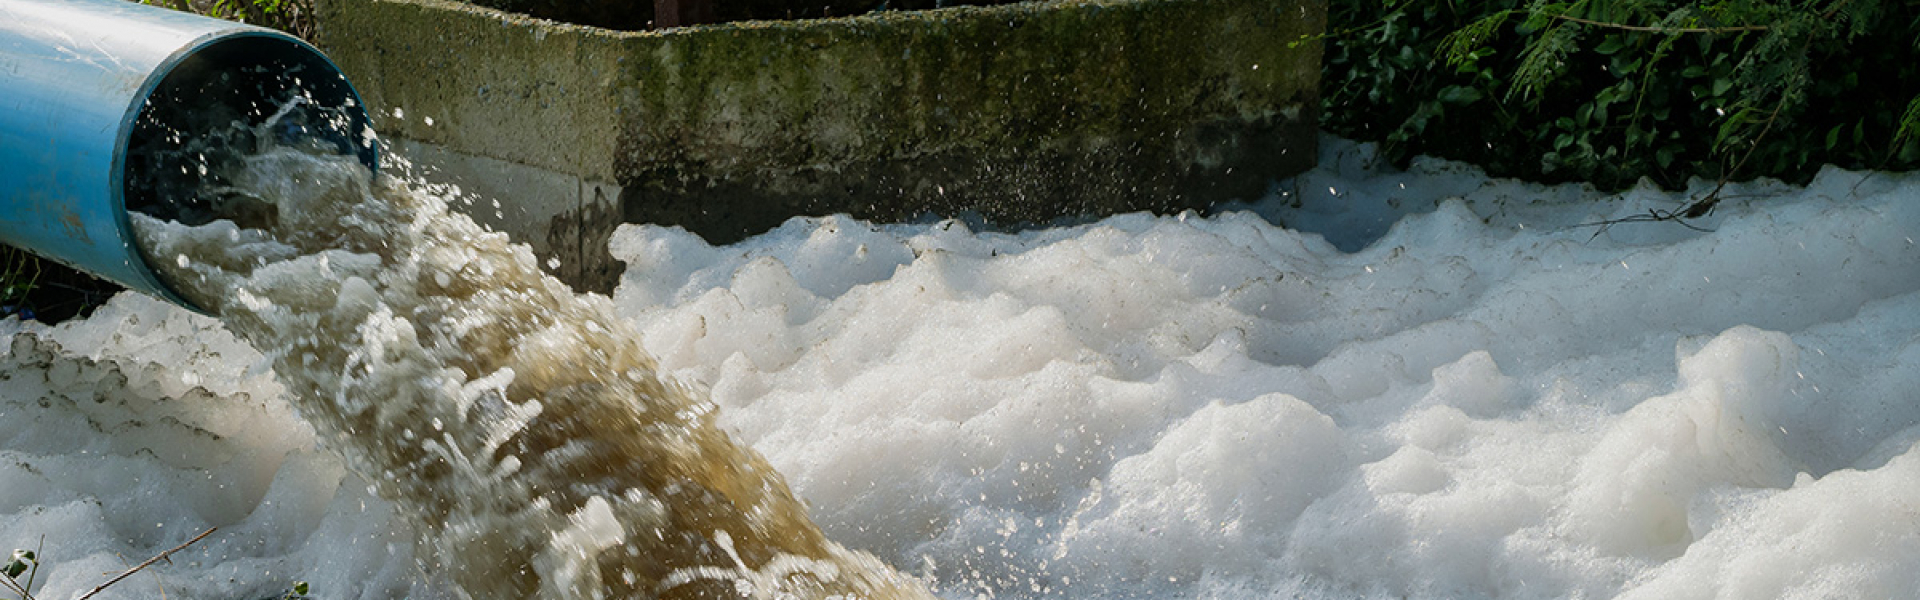 Wealden's Conservative leader demands “more ambitious deadlines” over sewage discharge into our waterways